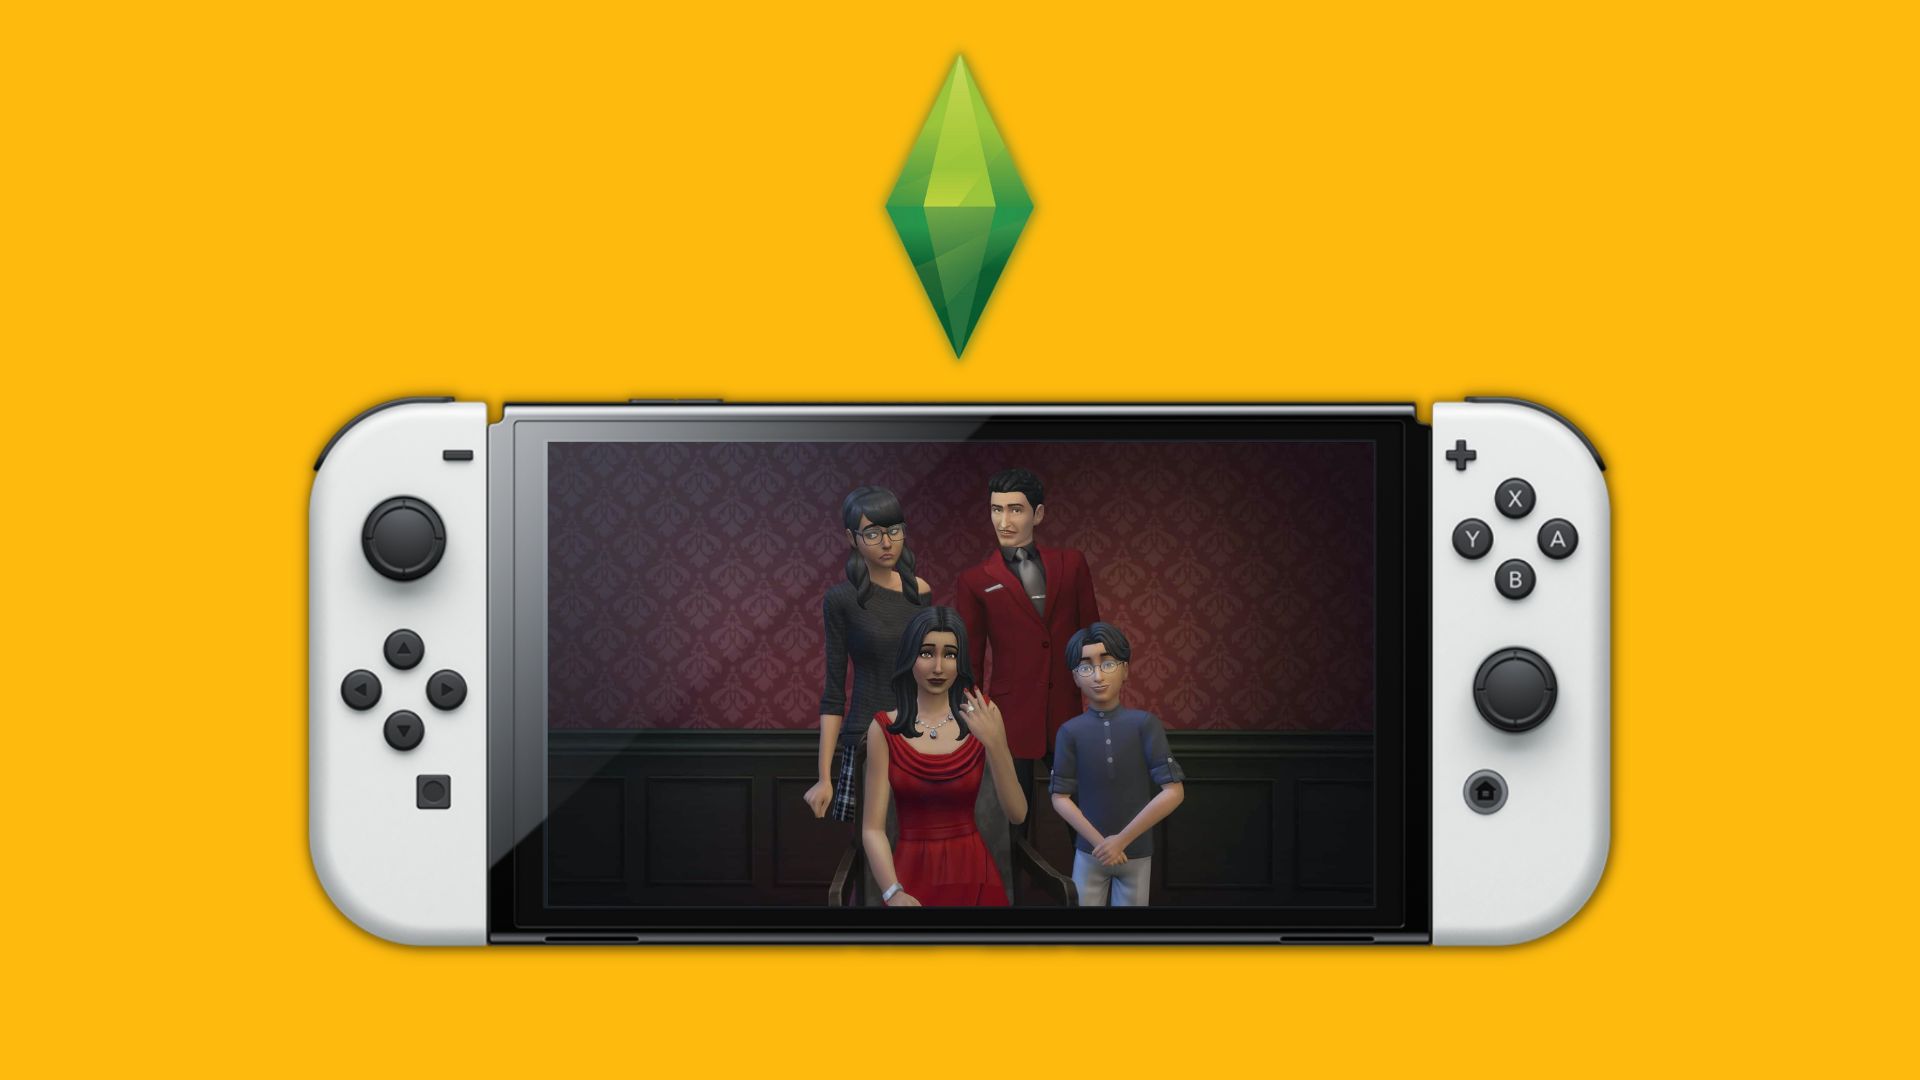 kromatisk Fundament virkningsfuldhed Will we ever get a Sims Nintendo Switch version? | Pocket Tactics